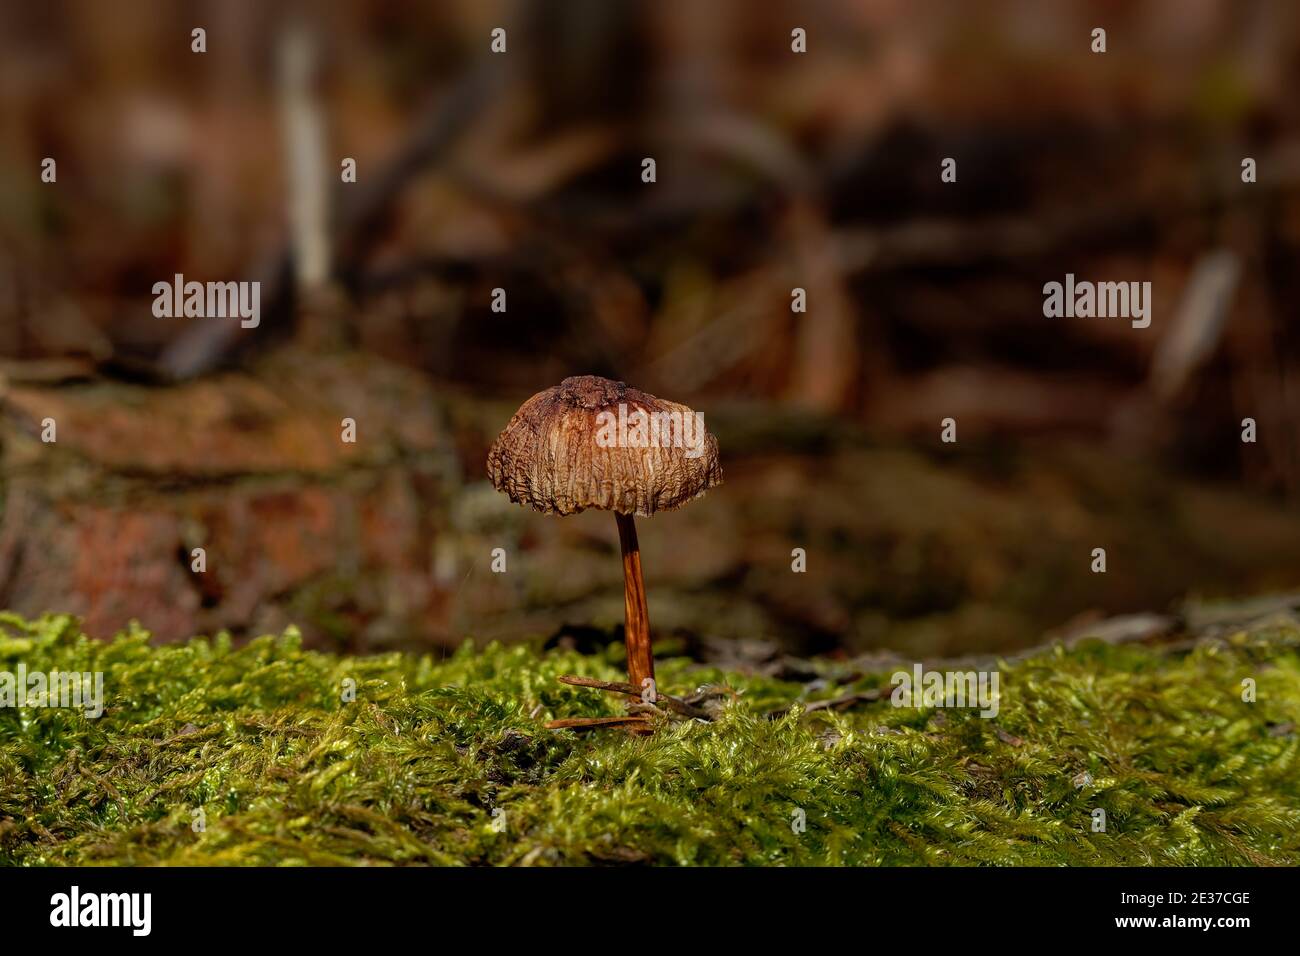 Fragile autumn mushroom on green moss, close-up photo of mushroom Stock Photo